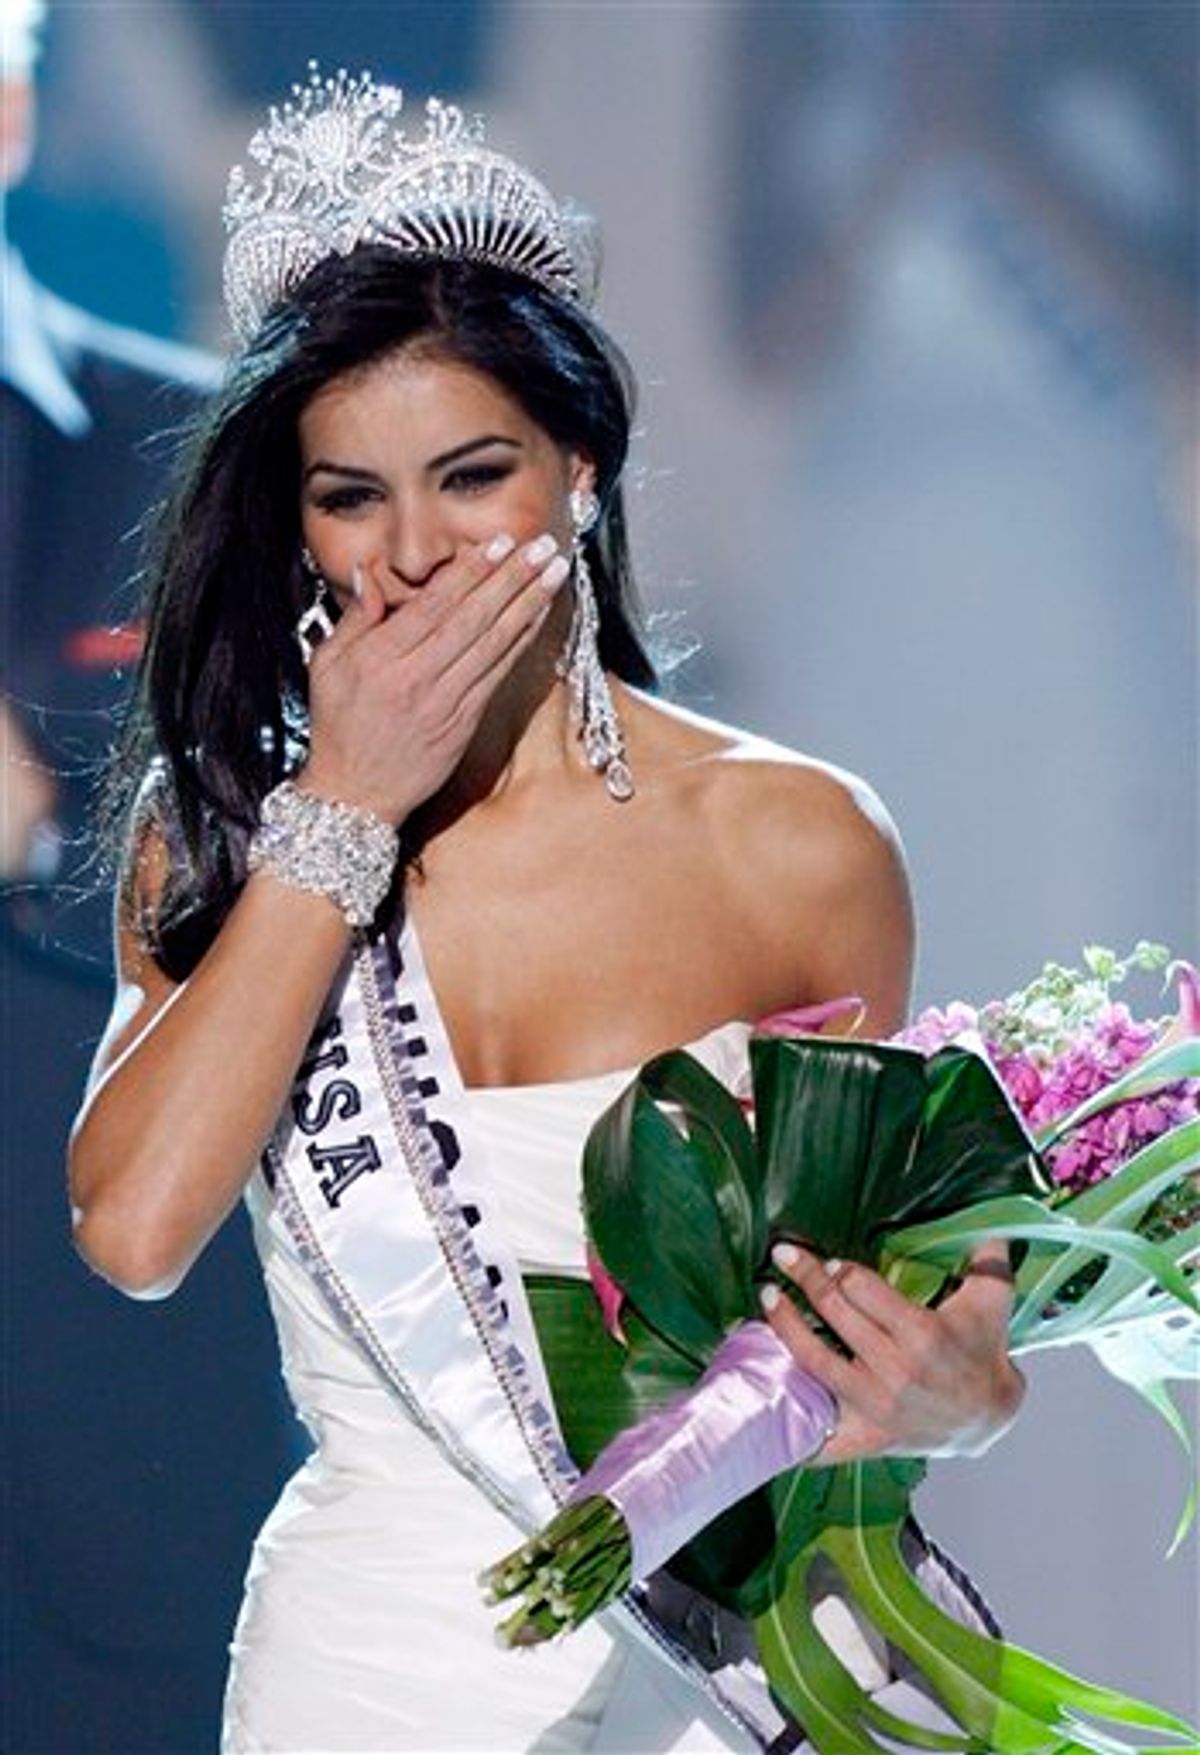 Miss Michigan Rima Fakih reacts as she is crowned Miss USA 2010 Sunday, May 16, 2010 in Las Vegas. (AP Photo/Isaac Brekken) (AP)